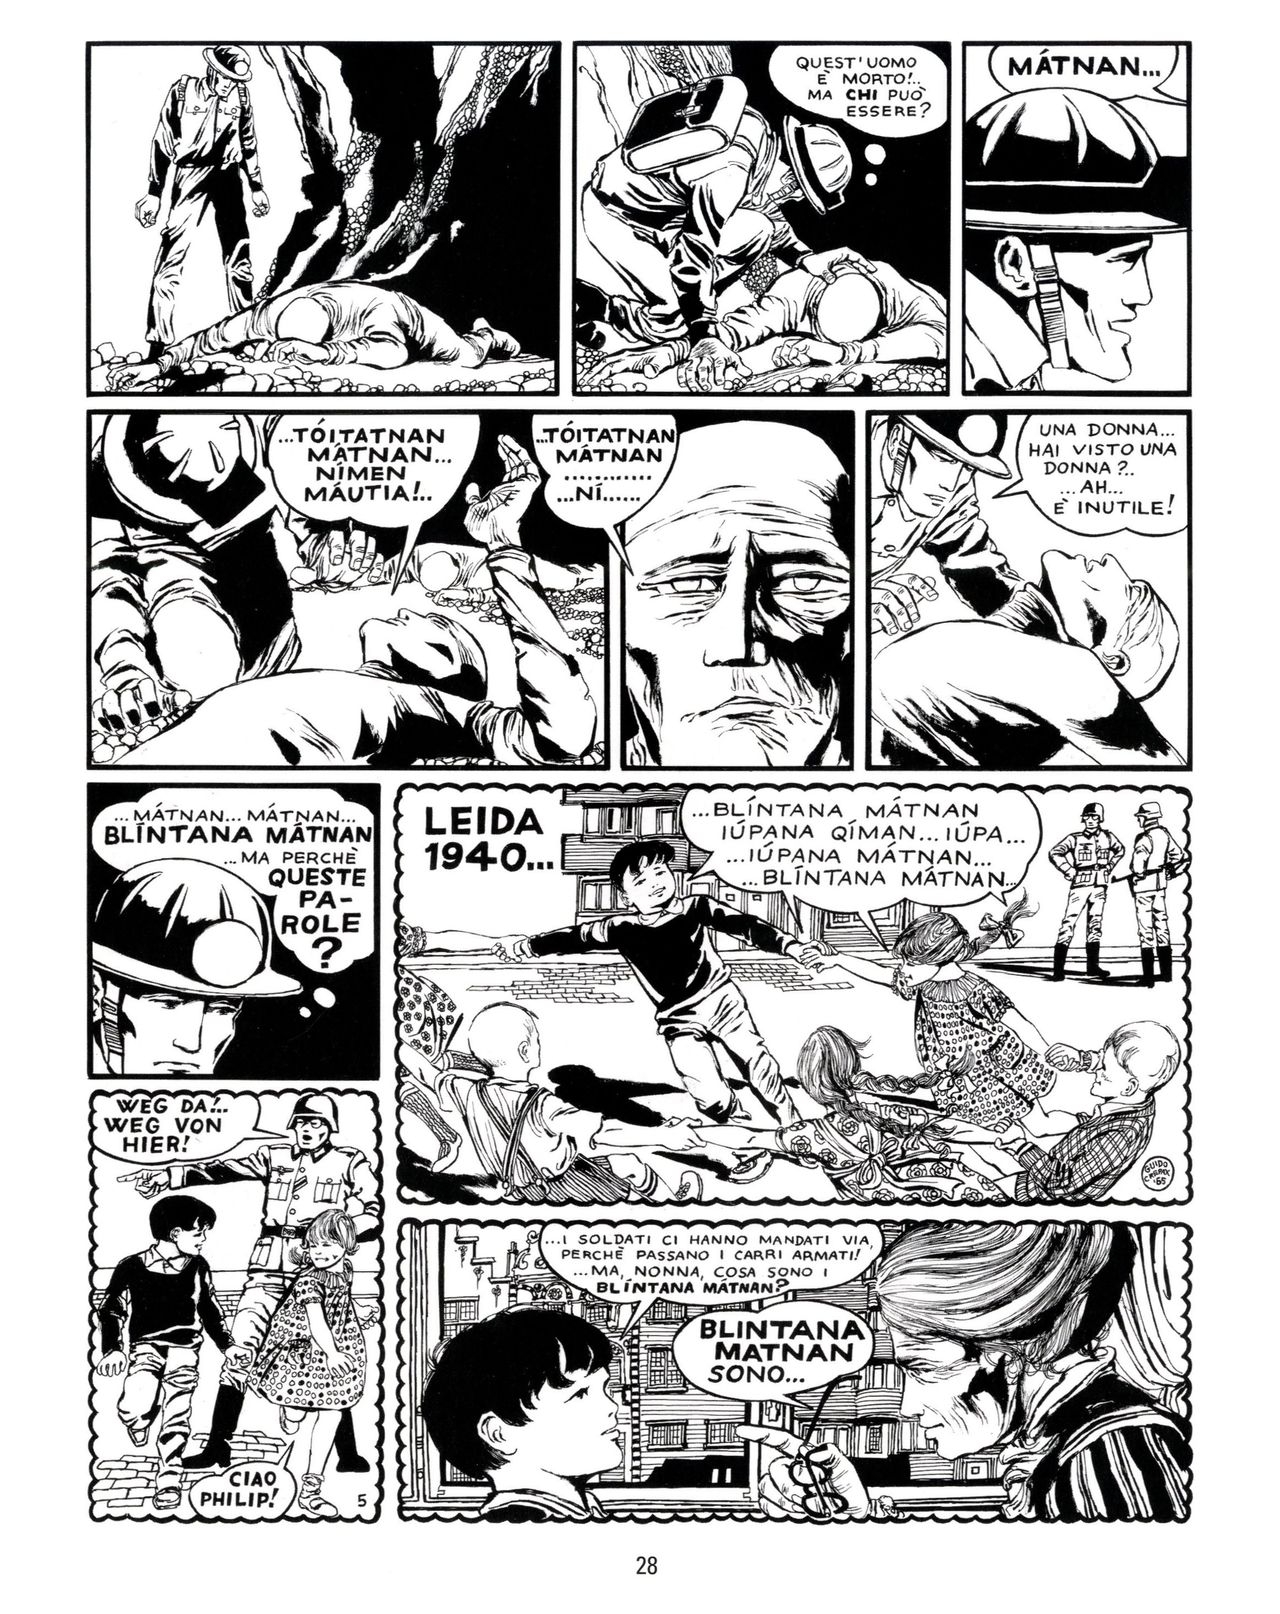 [Guido Crepax] Erotica Fumetti #25 : L'ascesa dei sotterranei : I cavalieri ciechi [Italian] 29